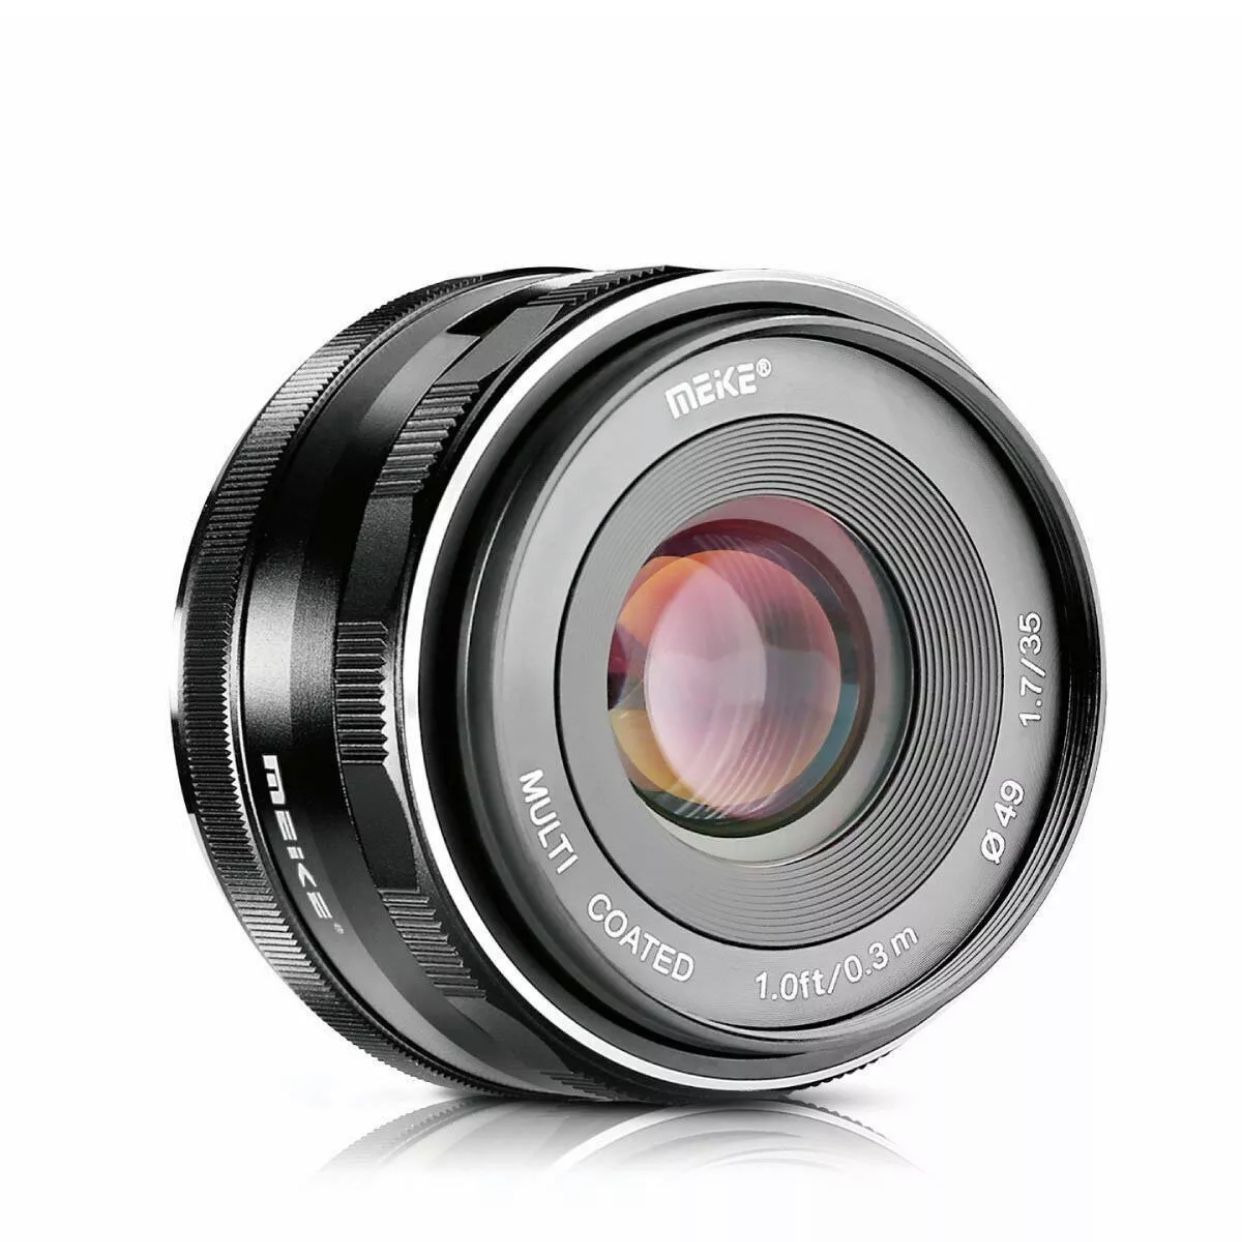 Meike 35mm f1.7 Emount manual lens